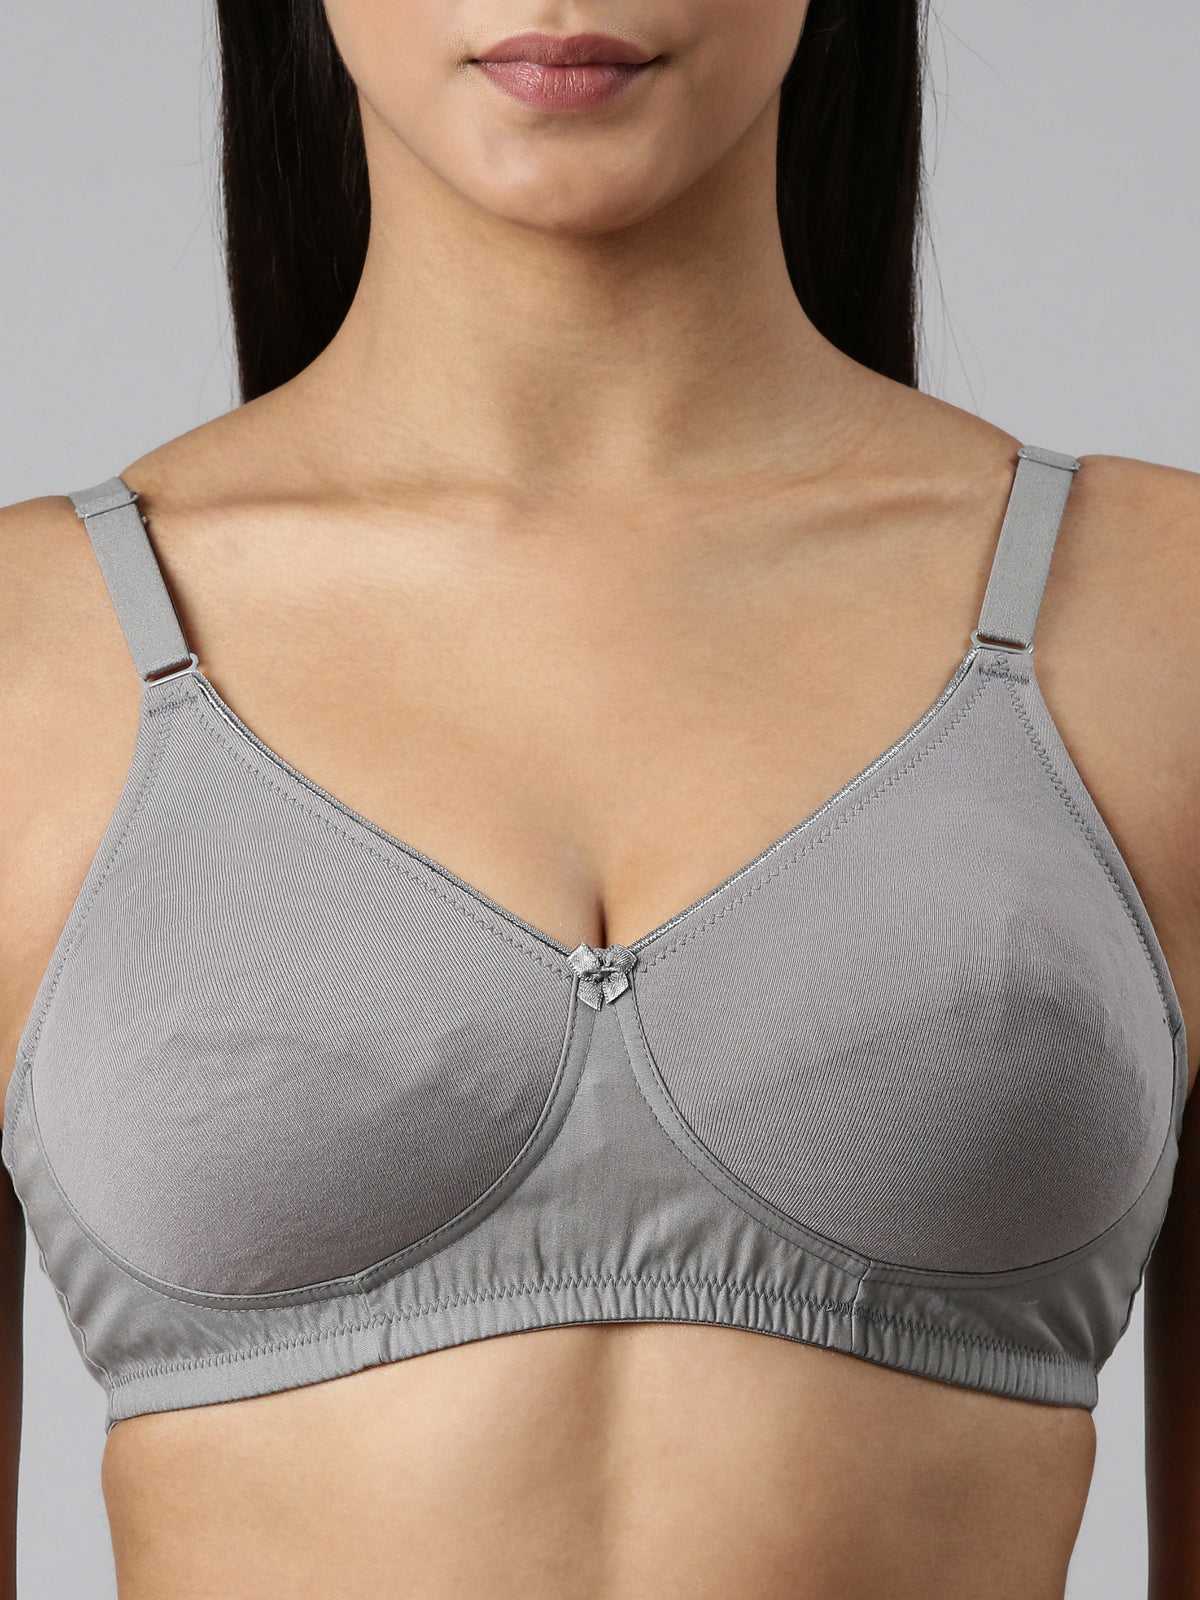 blossom-ethnic bra-dark grey2-woven cotton-everyday bra